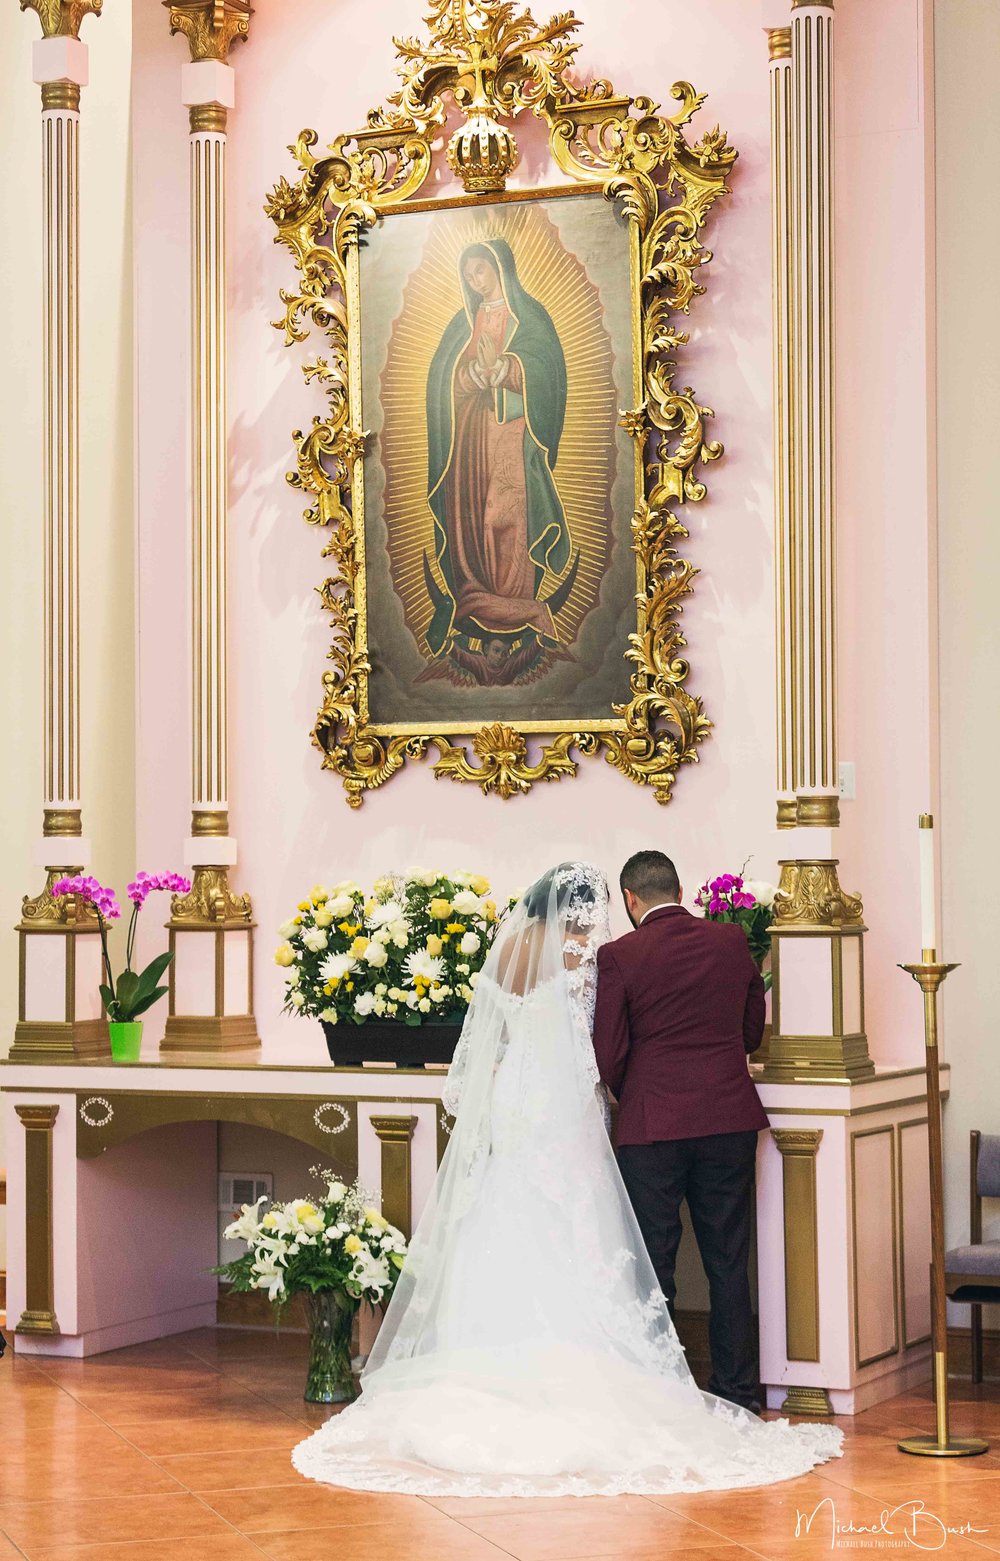 Wedding-Details-Bride-Fort Worth-colors-Ceremony-weddingceremony-brides-groom-ido-church-rituals, mary.jpg